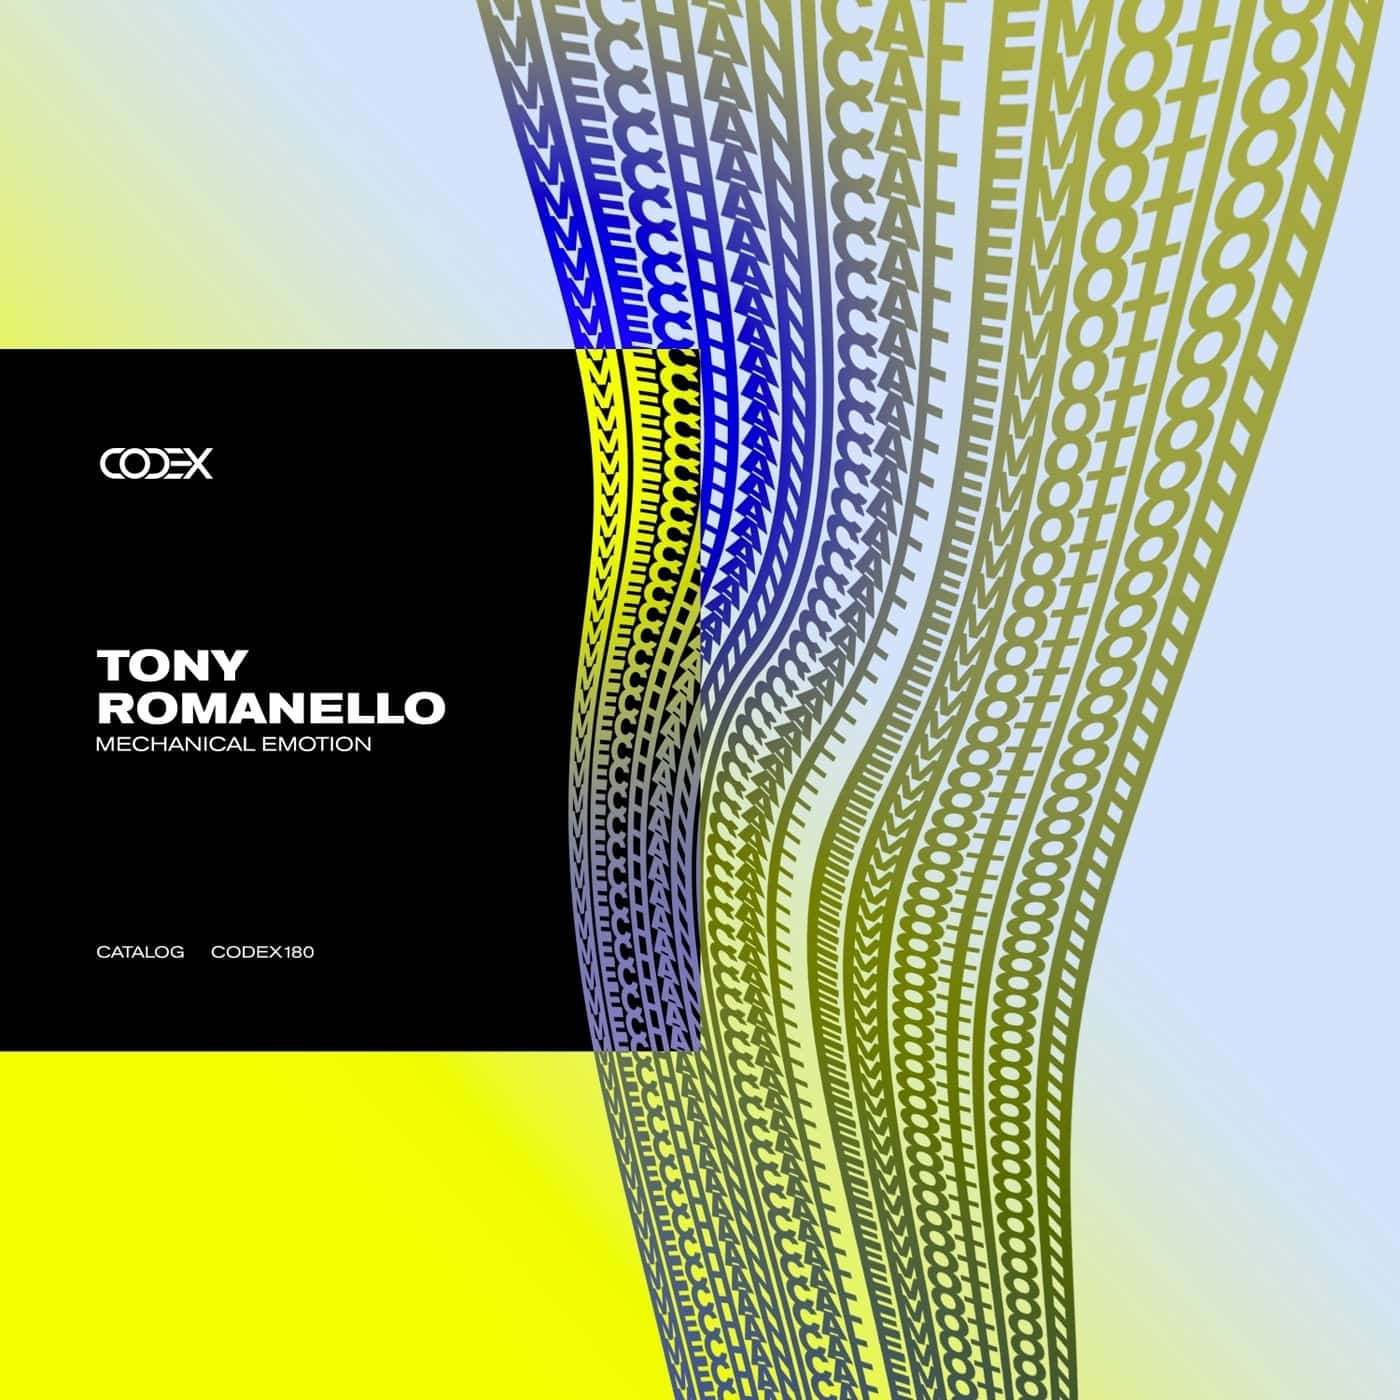 image cover: Tony Romanello - Mechanical Emotion / CODEX180